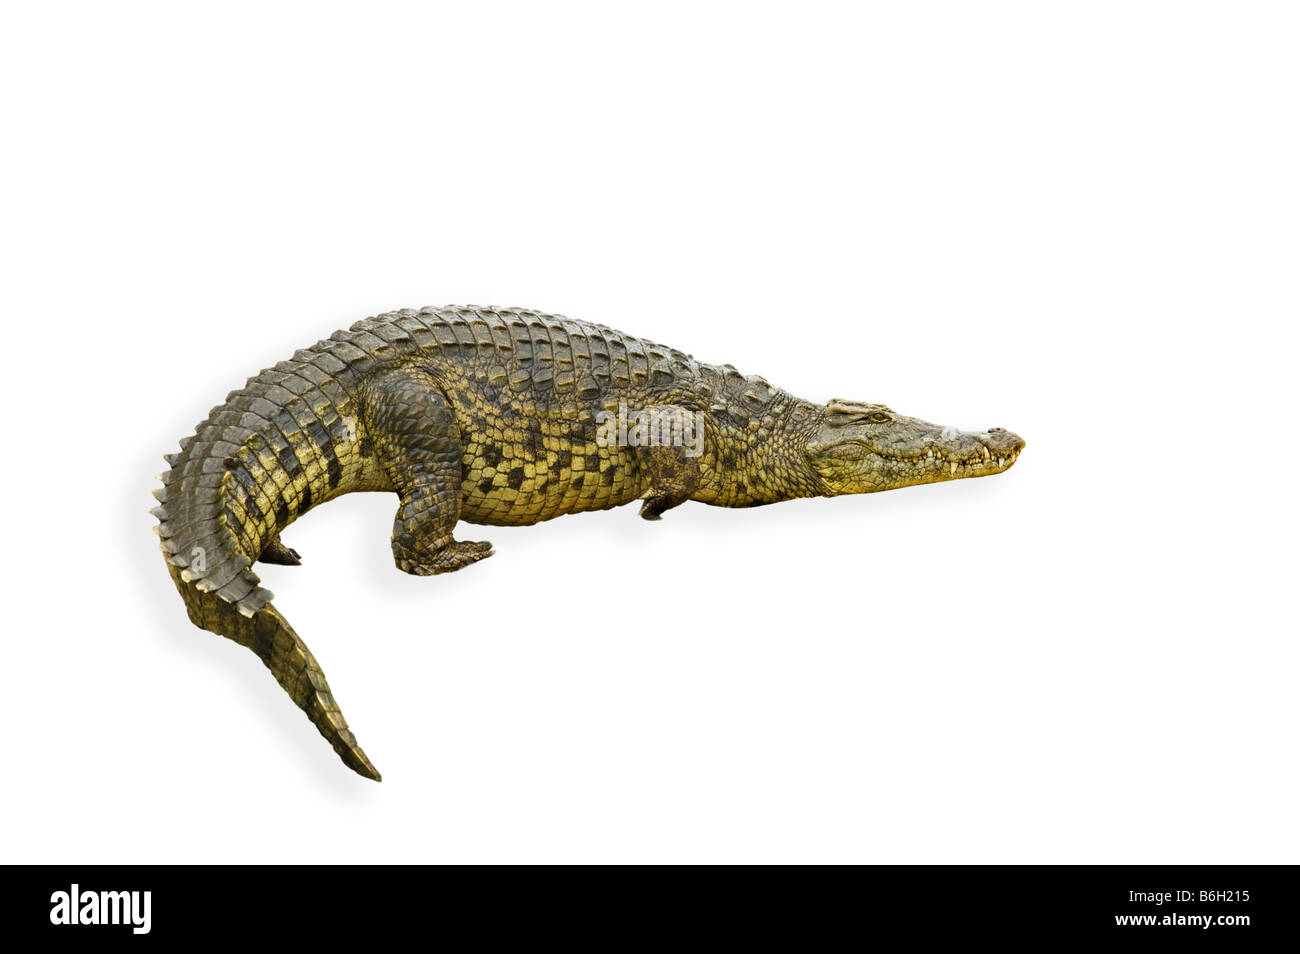 Recorte de la fauna silvestre de cocodrilos del Nilo Crocodylus niloticus sur-Afrika Sudáfrica big fat símbolo pesado backgr blanco simbólico Foto de stock